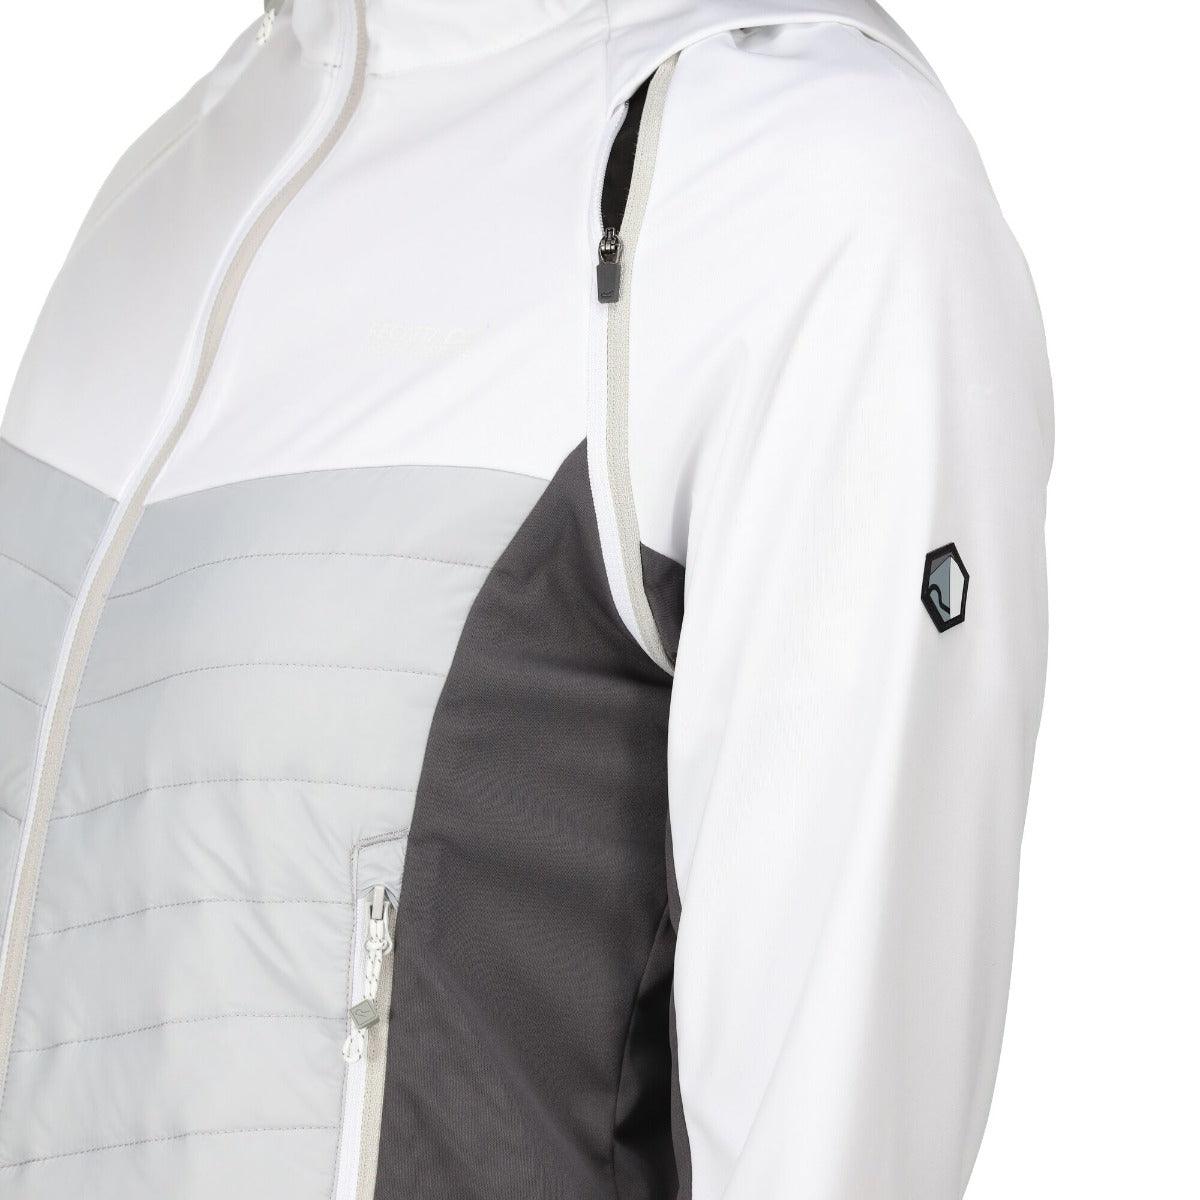 Regatta Steren Women's Hybrid Jacket with Detachable Sleeves